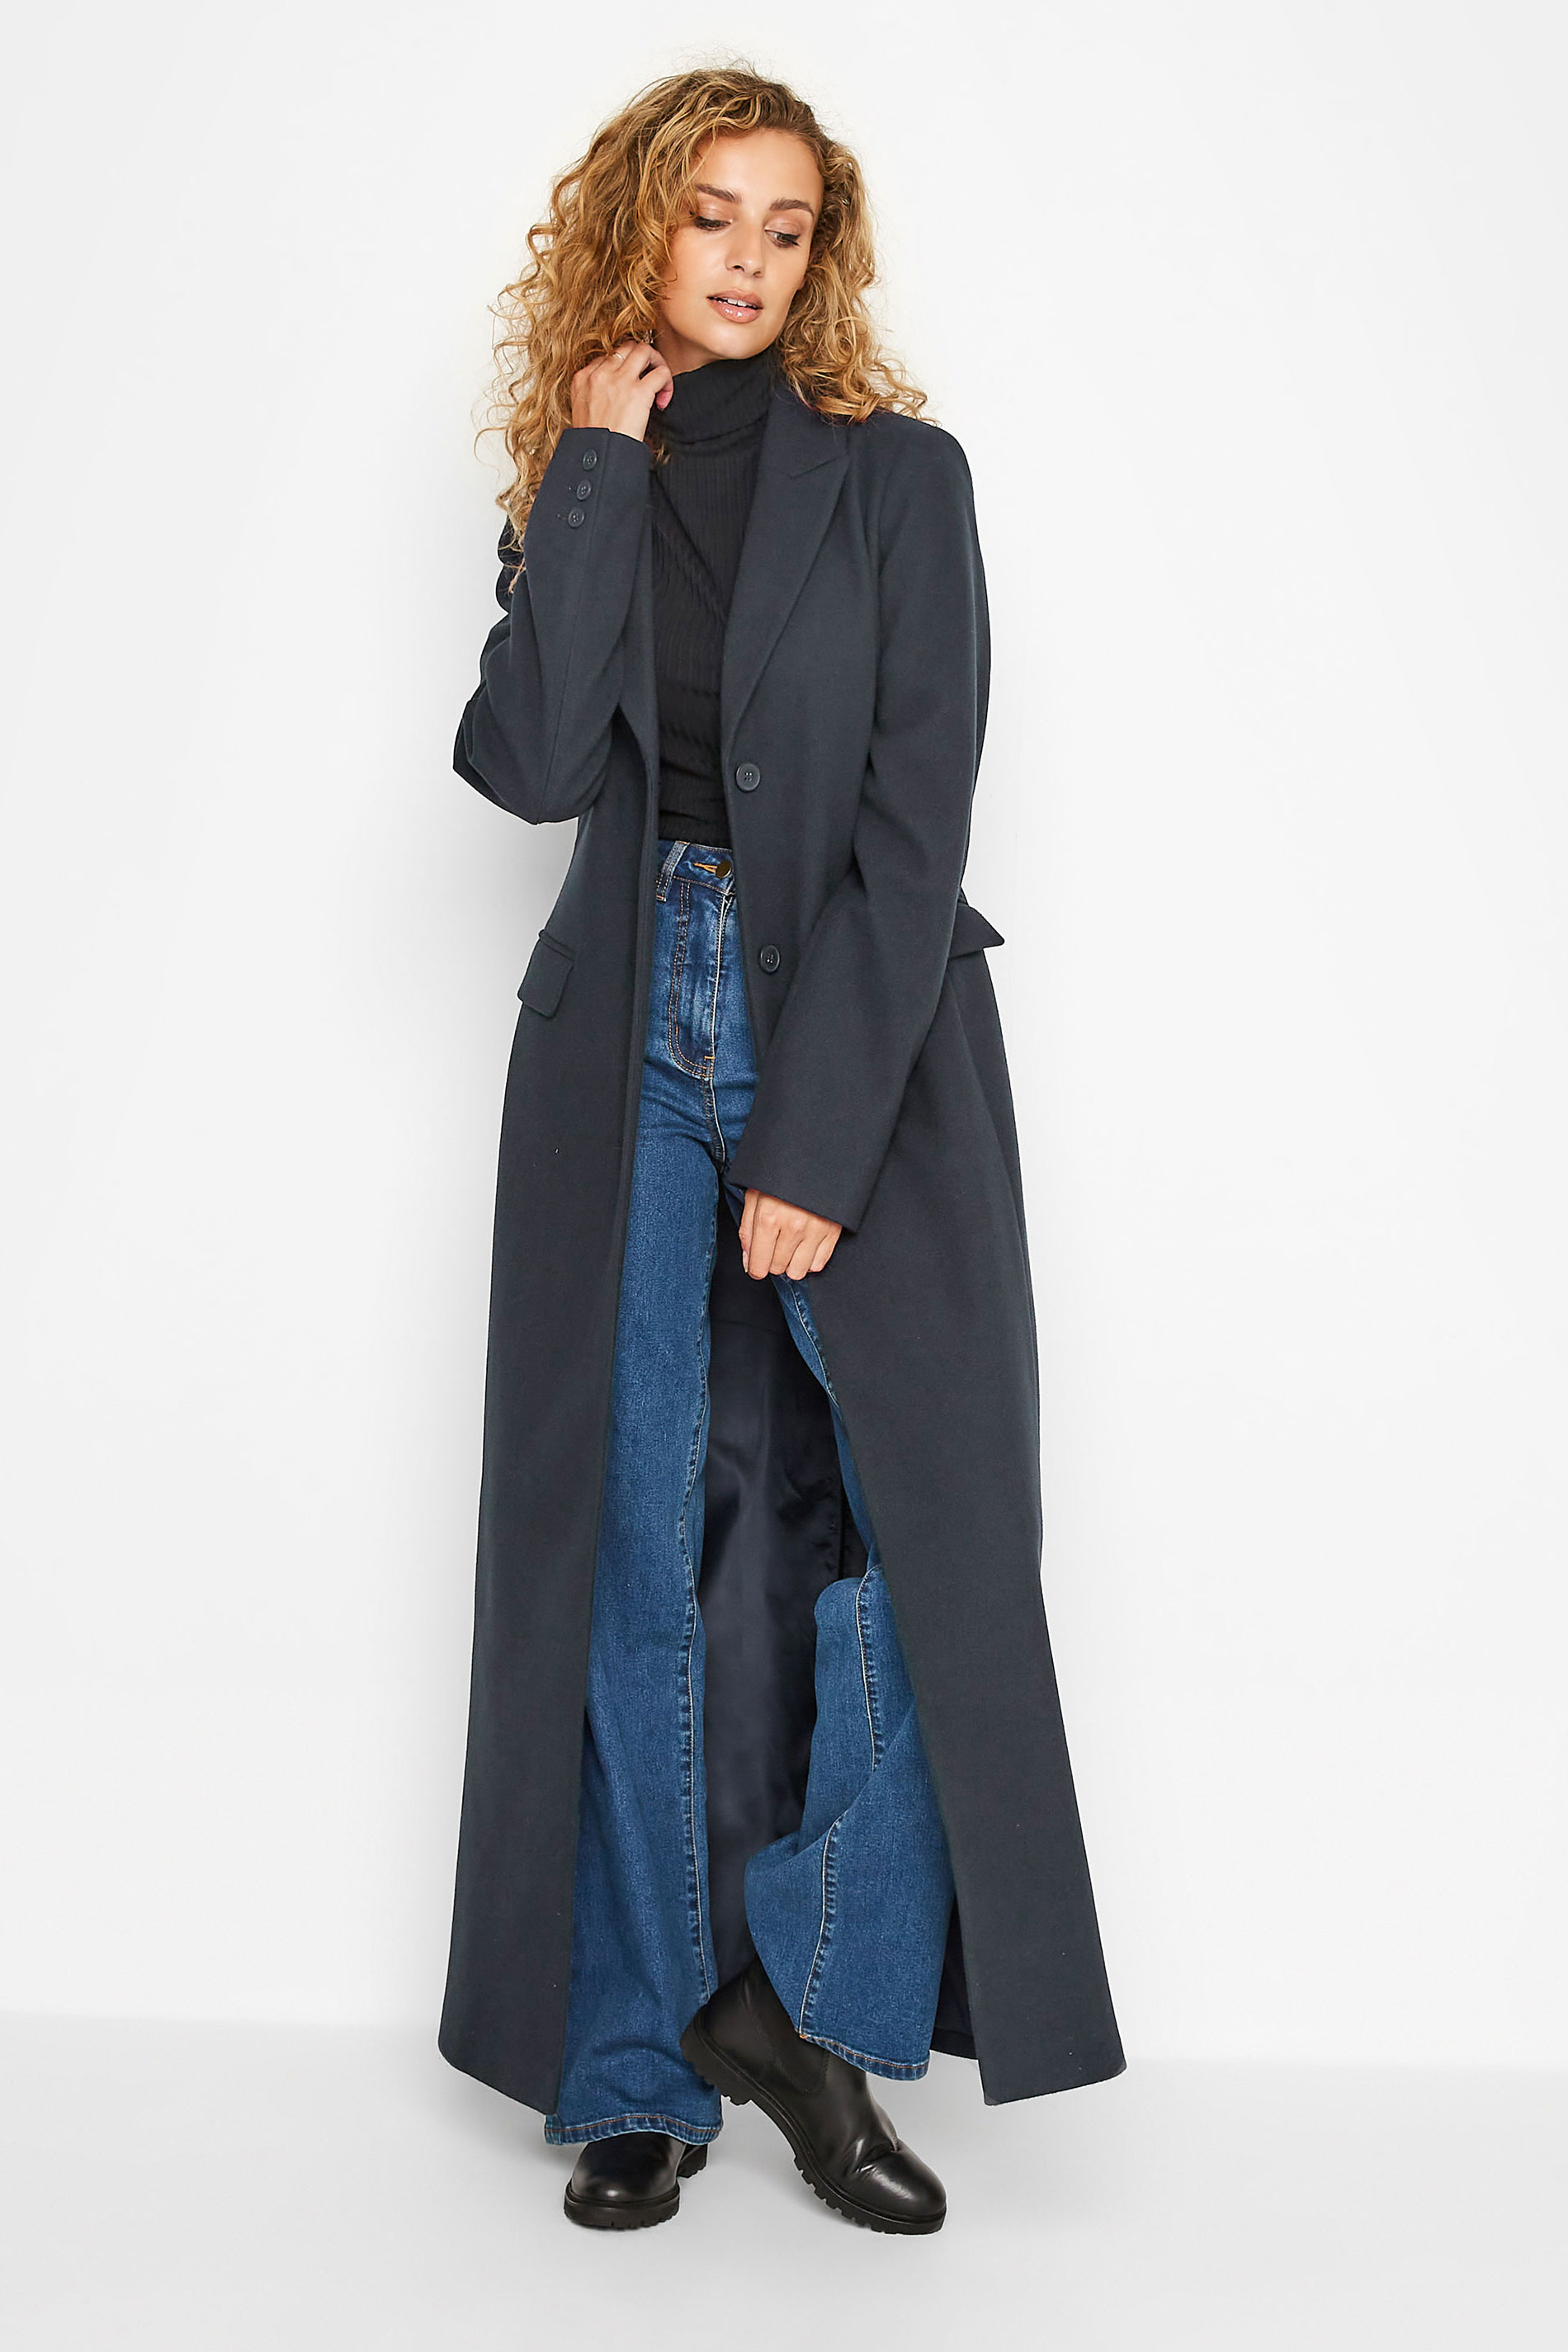 Tall Women's LTS Navy Blue Long Formal Coat | Long Tall Sally 2